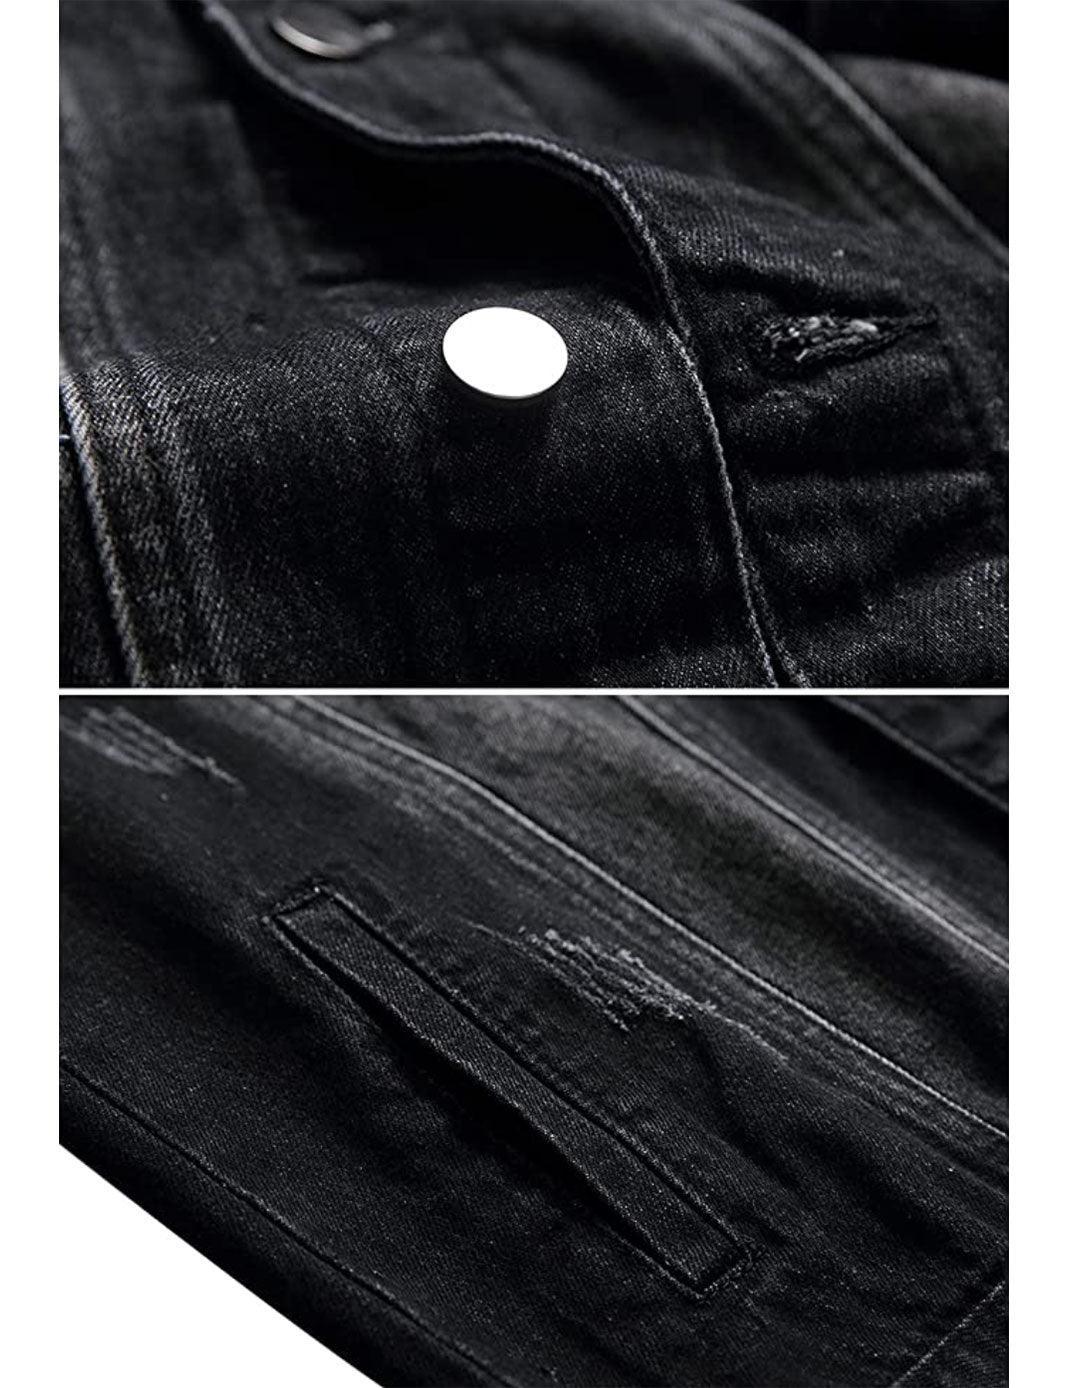 Shady Black Denim Washed Jacket - Constantly Create Shop